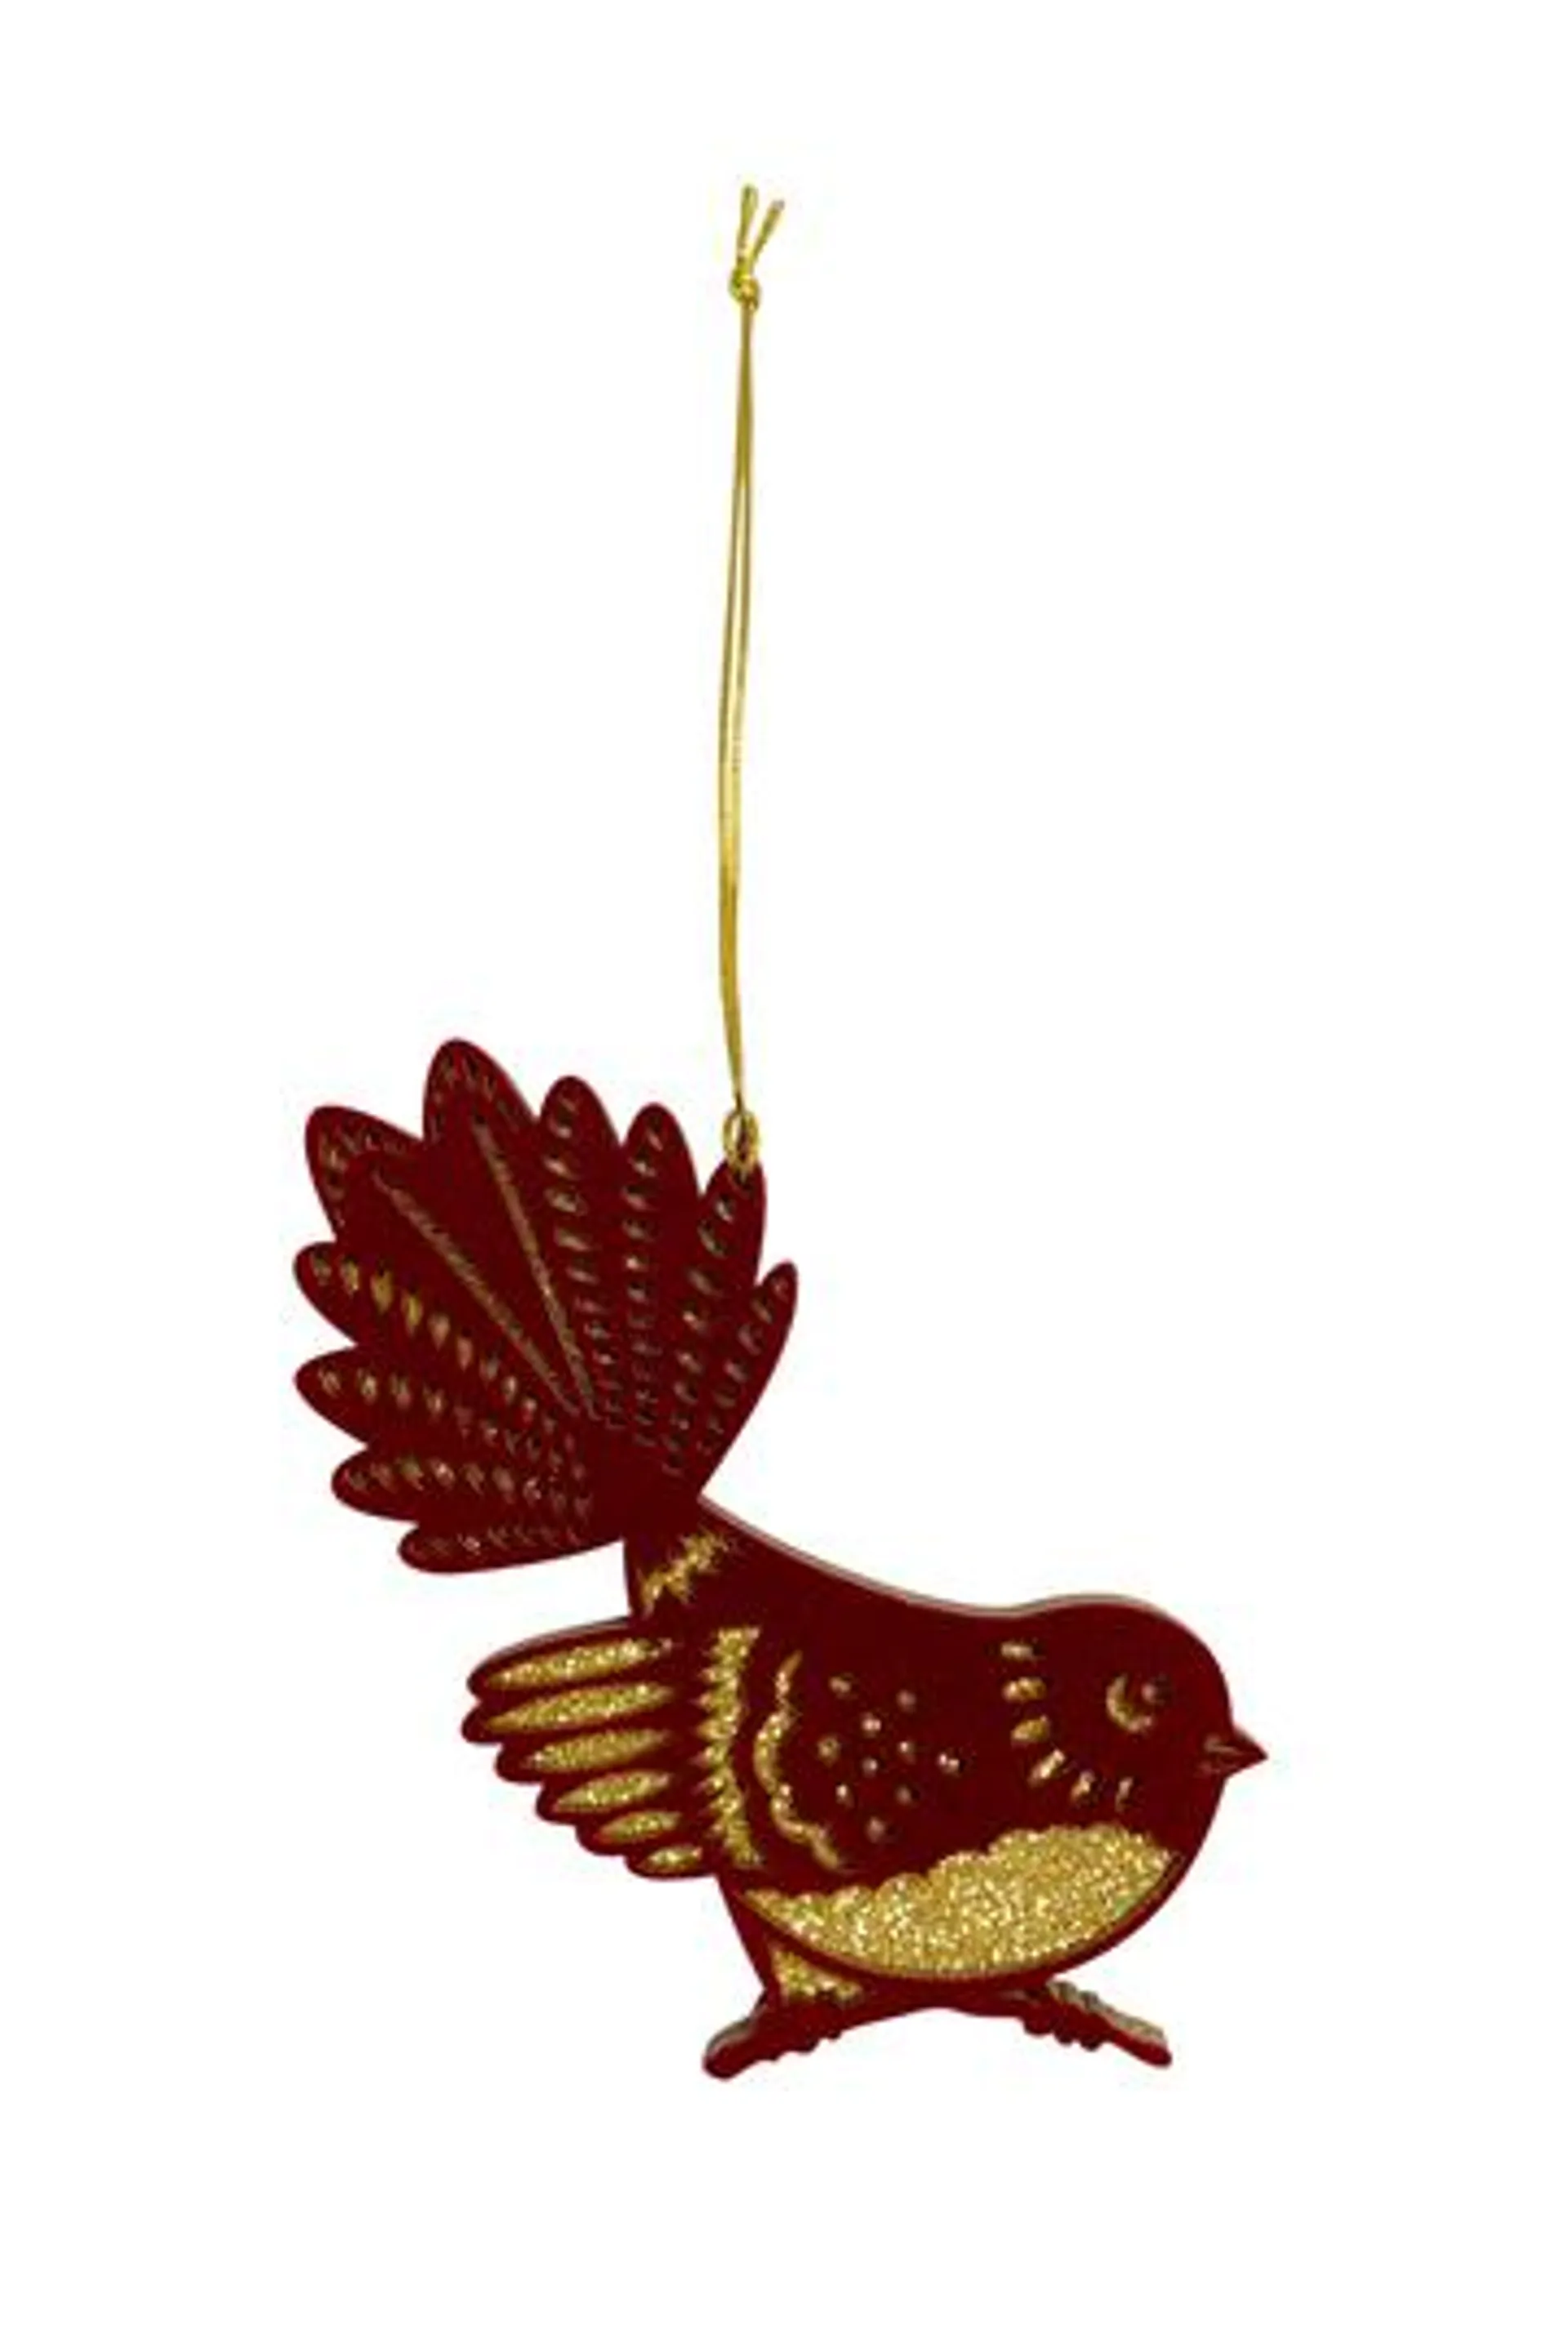 DQ & Co. Decoration Flock Fantail Dark Red & Gold